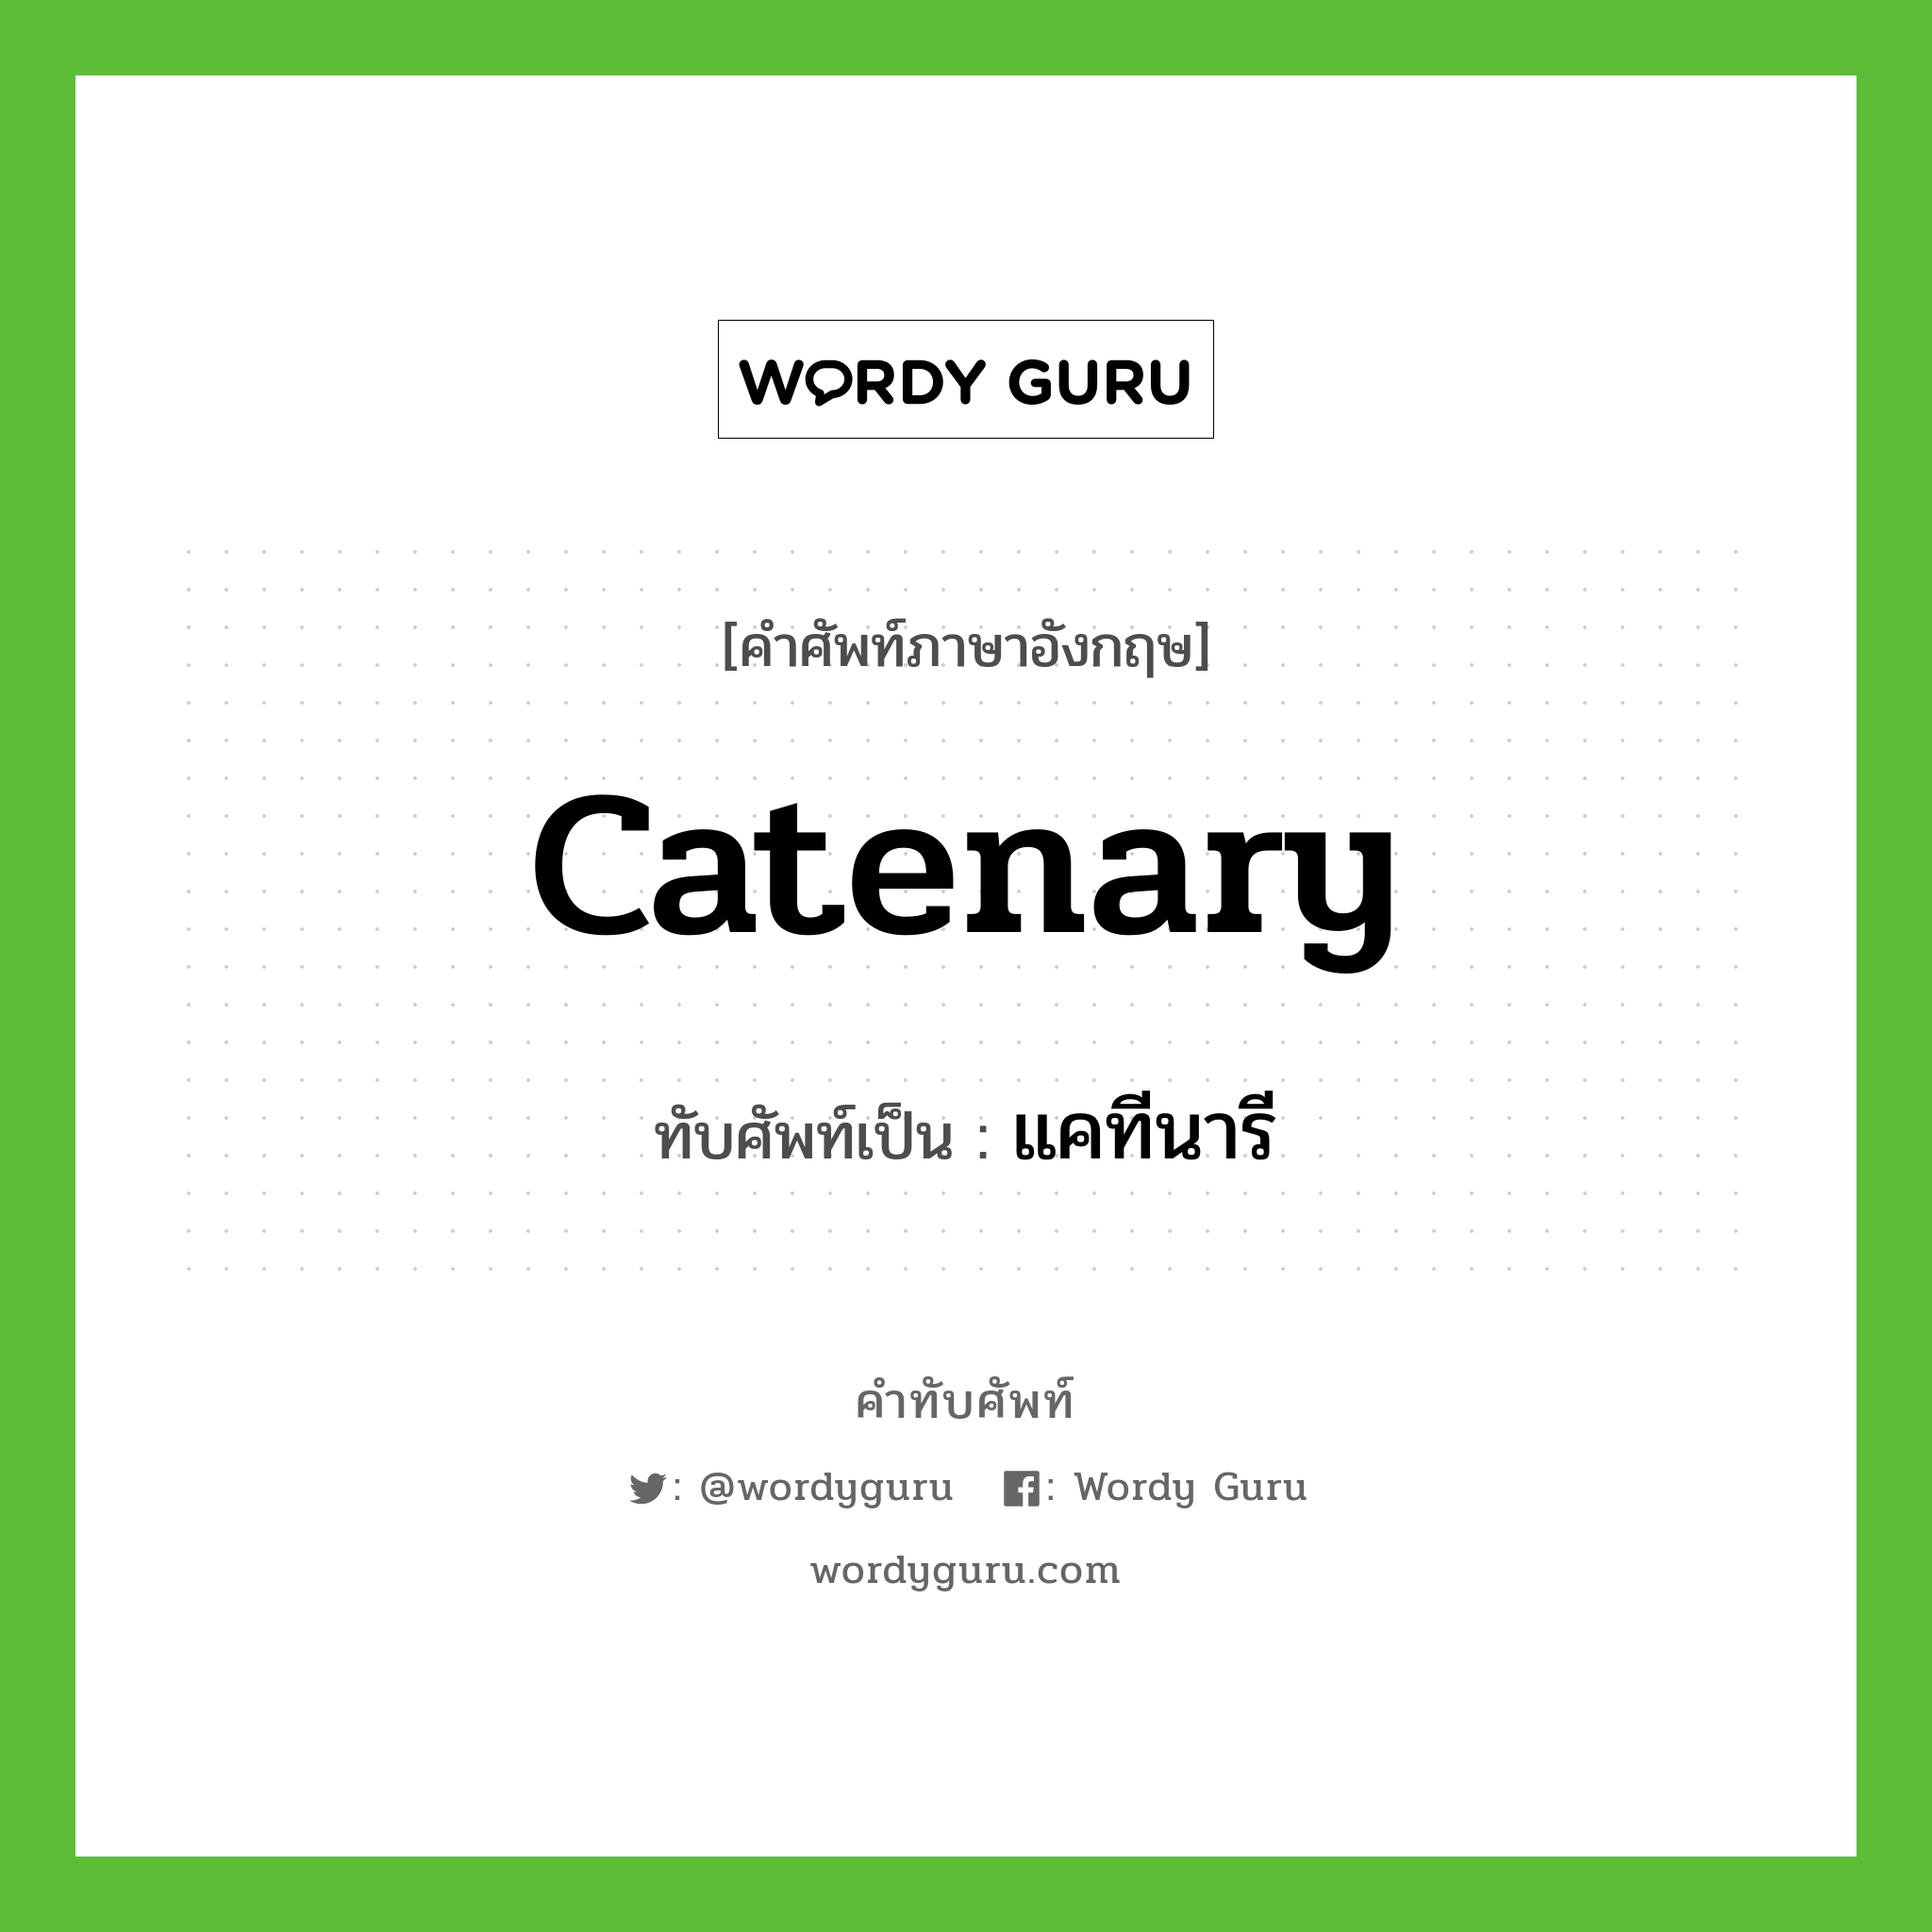 catenary เขียนเป็นคำไทยว่าอะไร?, คำศัพท์ภาษาอังกฤษ catenary ทับศัพท์เป็น แคทีนารี